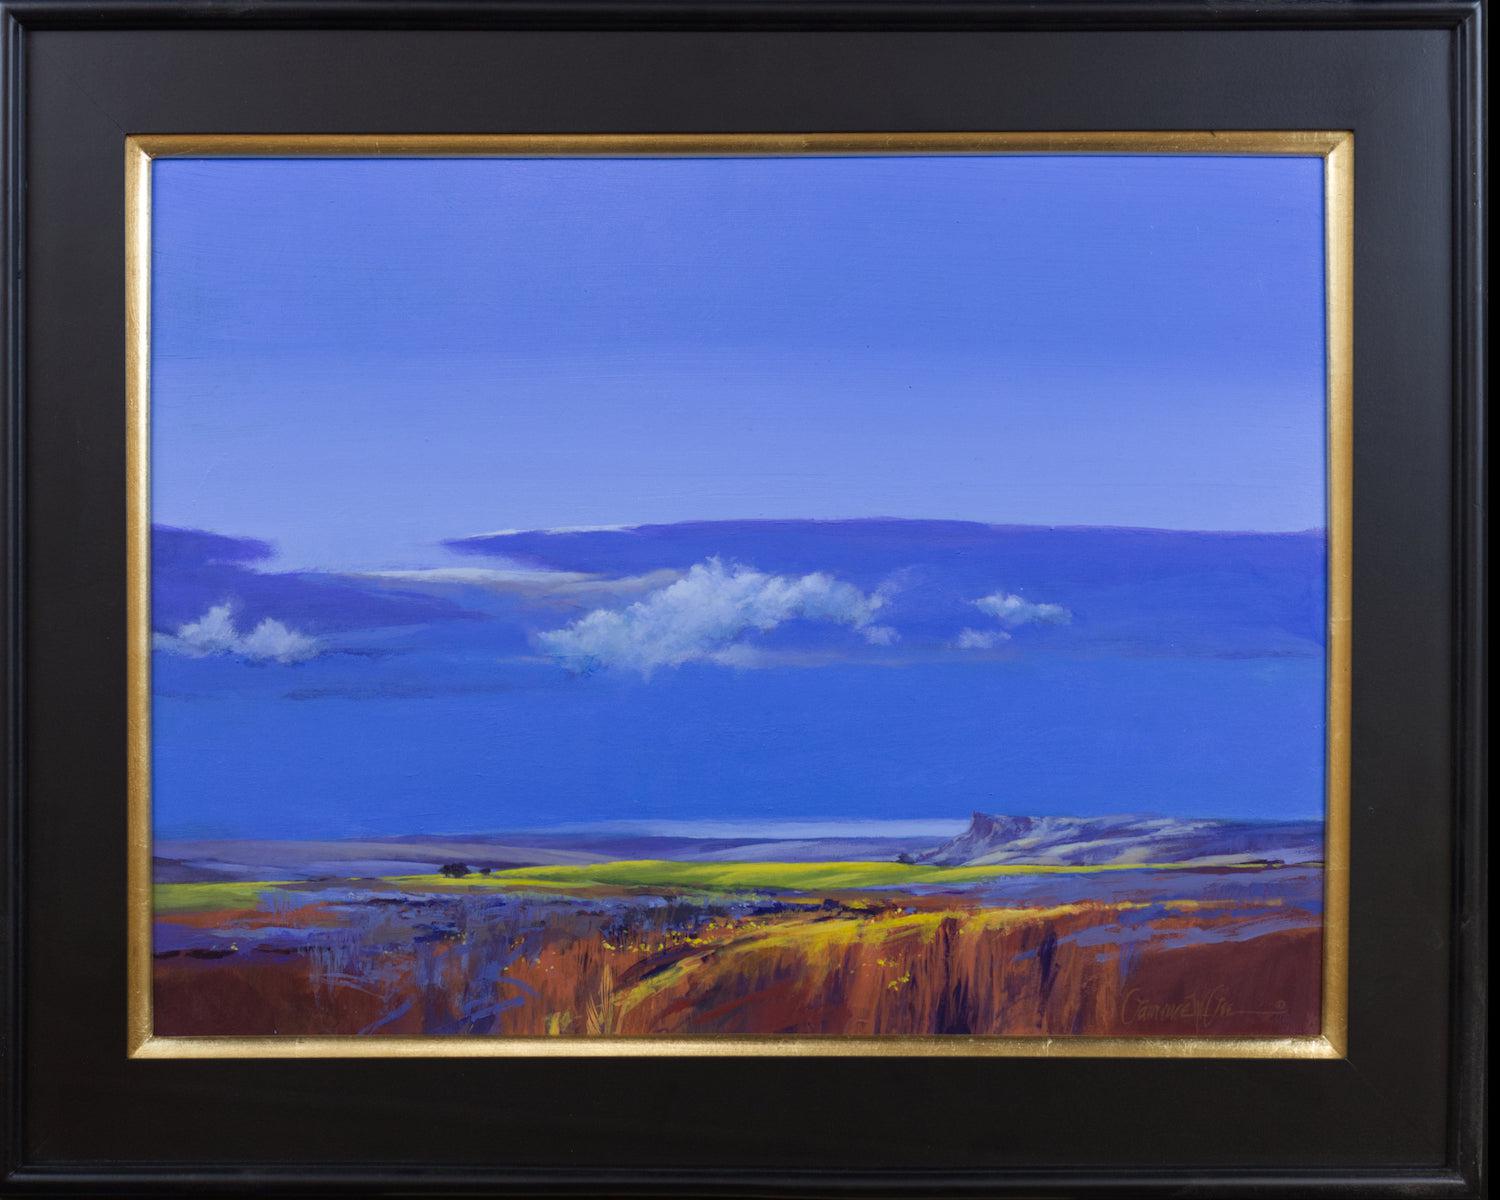 Dreamland Afternoon-Painting-Lawrence Lee-Sorrel Sky Gallery